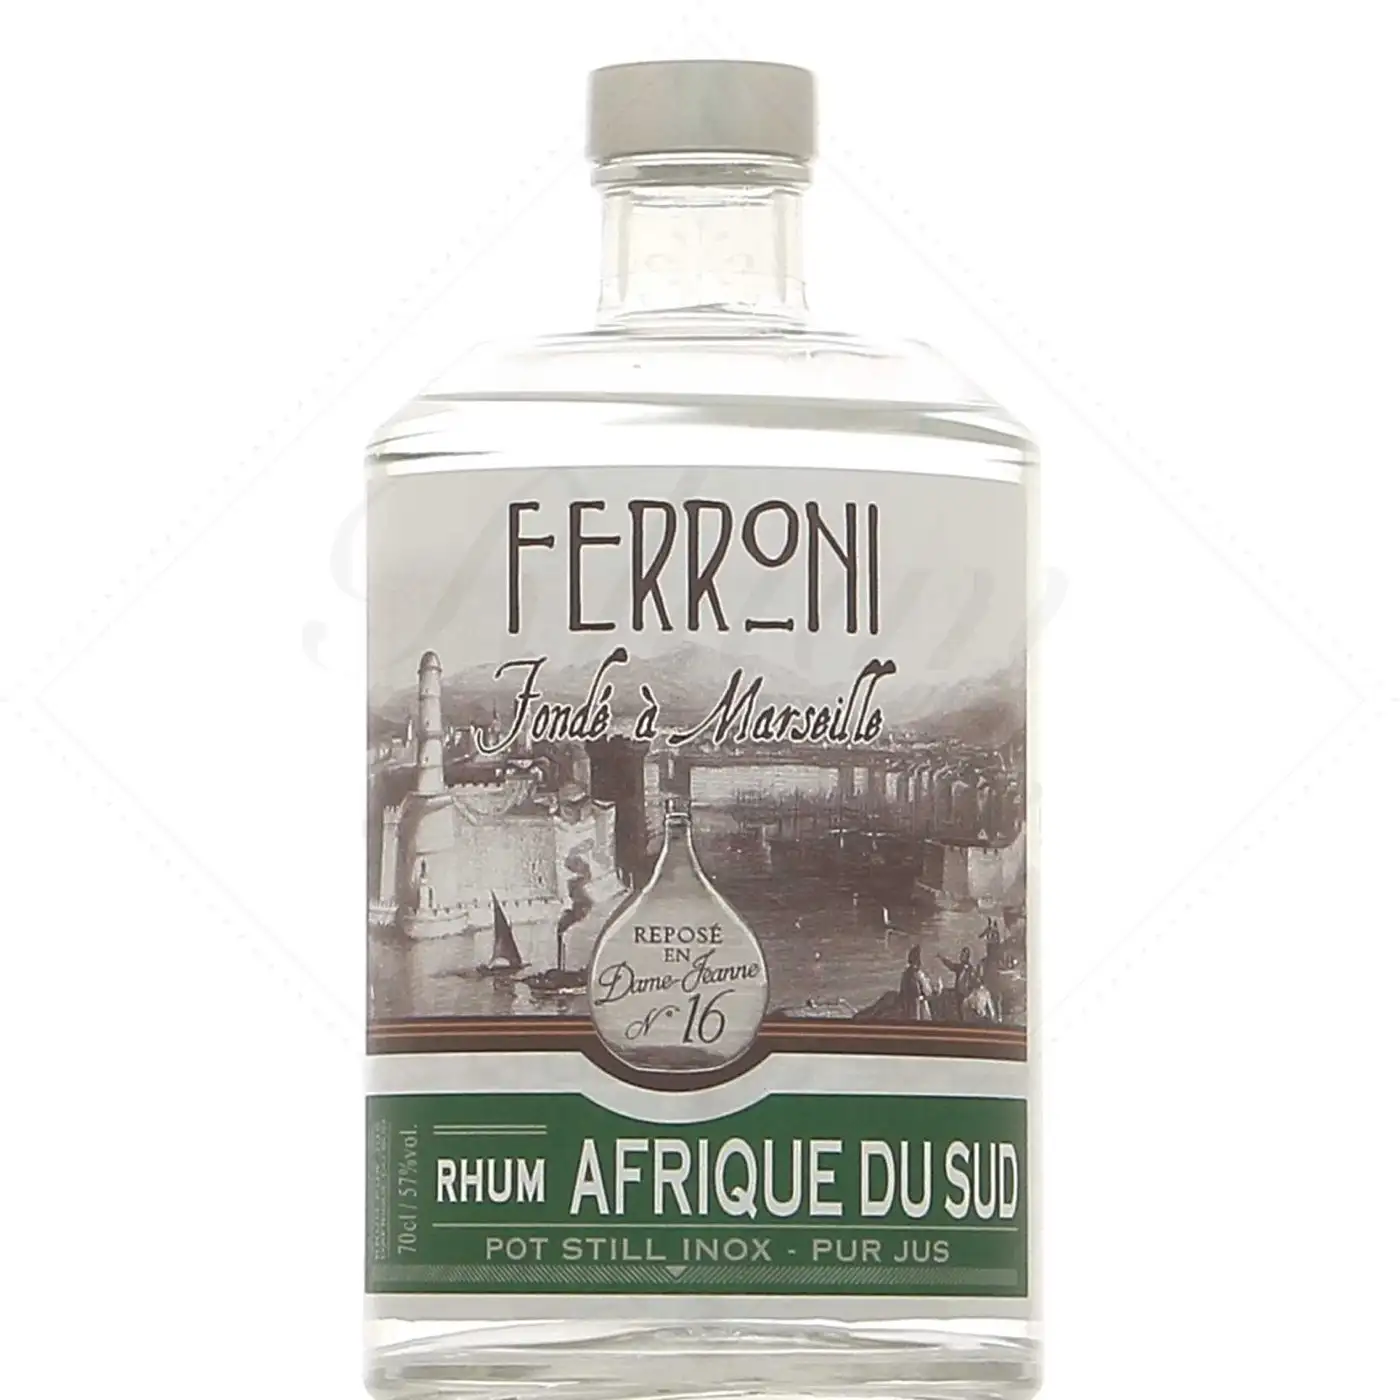 Image of the front of the bottle of the rum La Dame Jeanne 16 (Rhum Afrique du Sud)